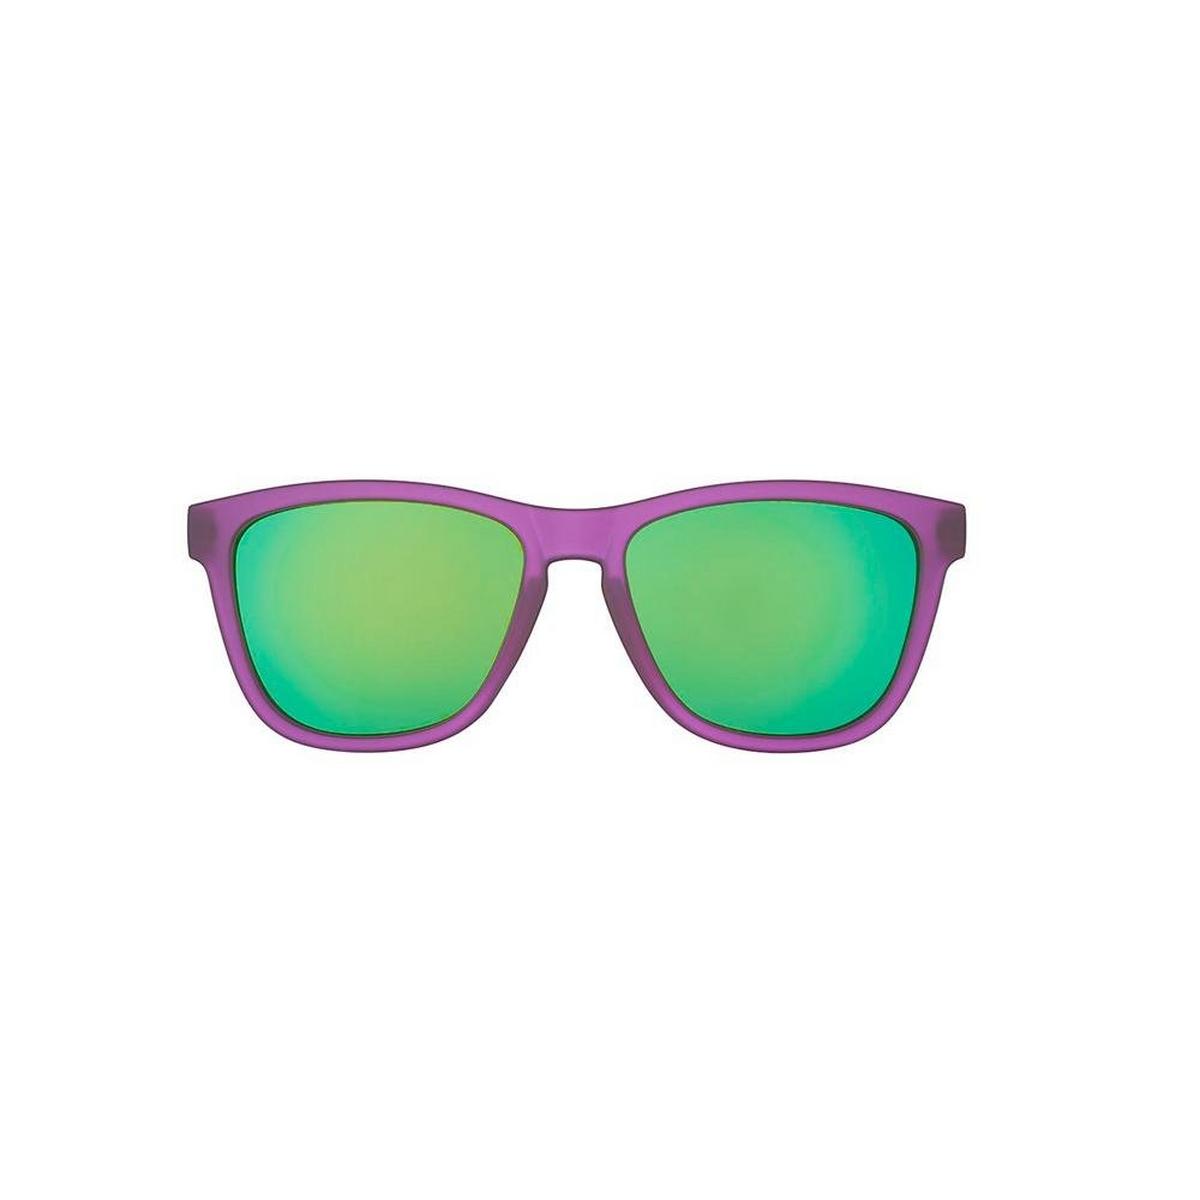 Goodr Gardening with a Kraken Sunglasses - Purple